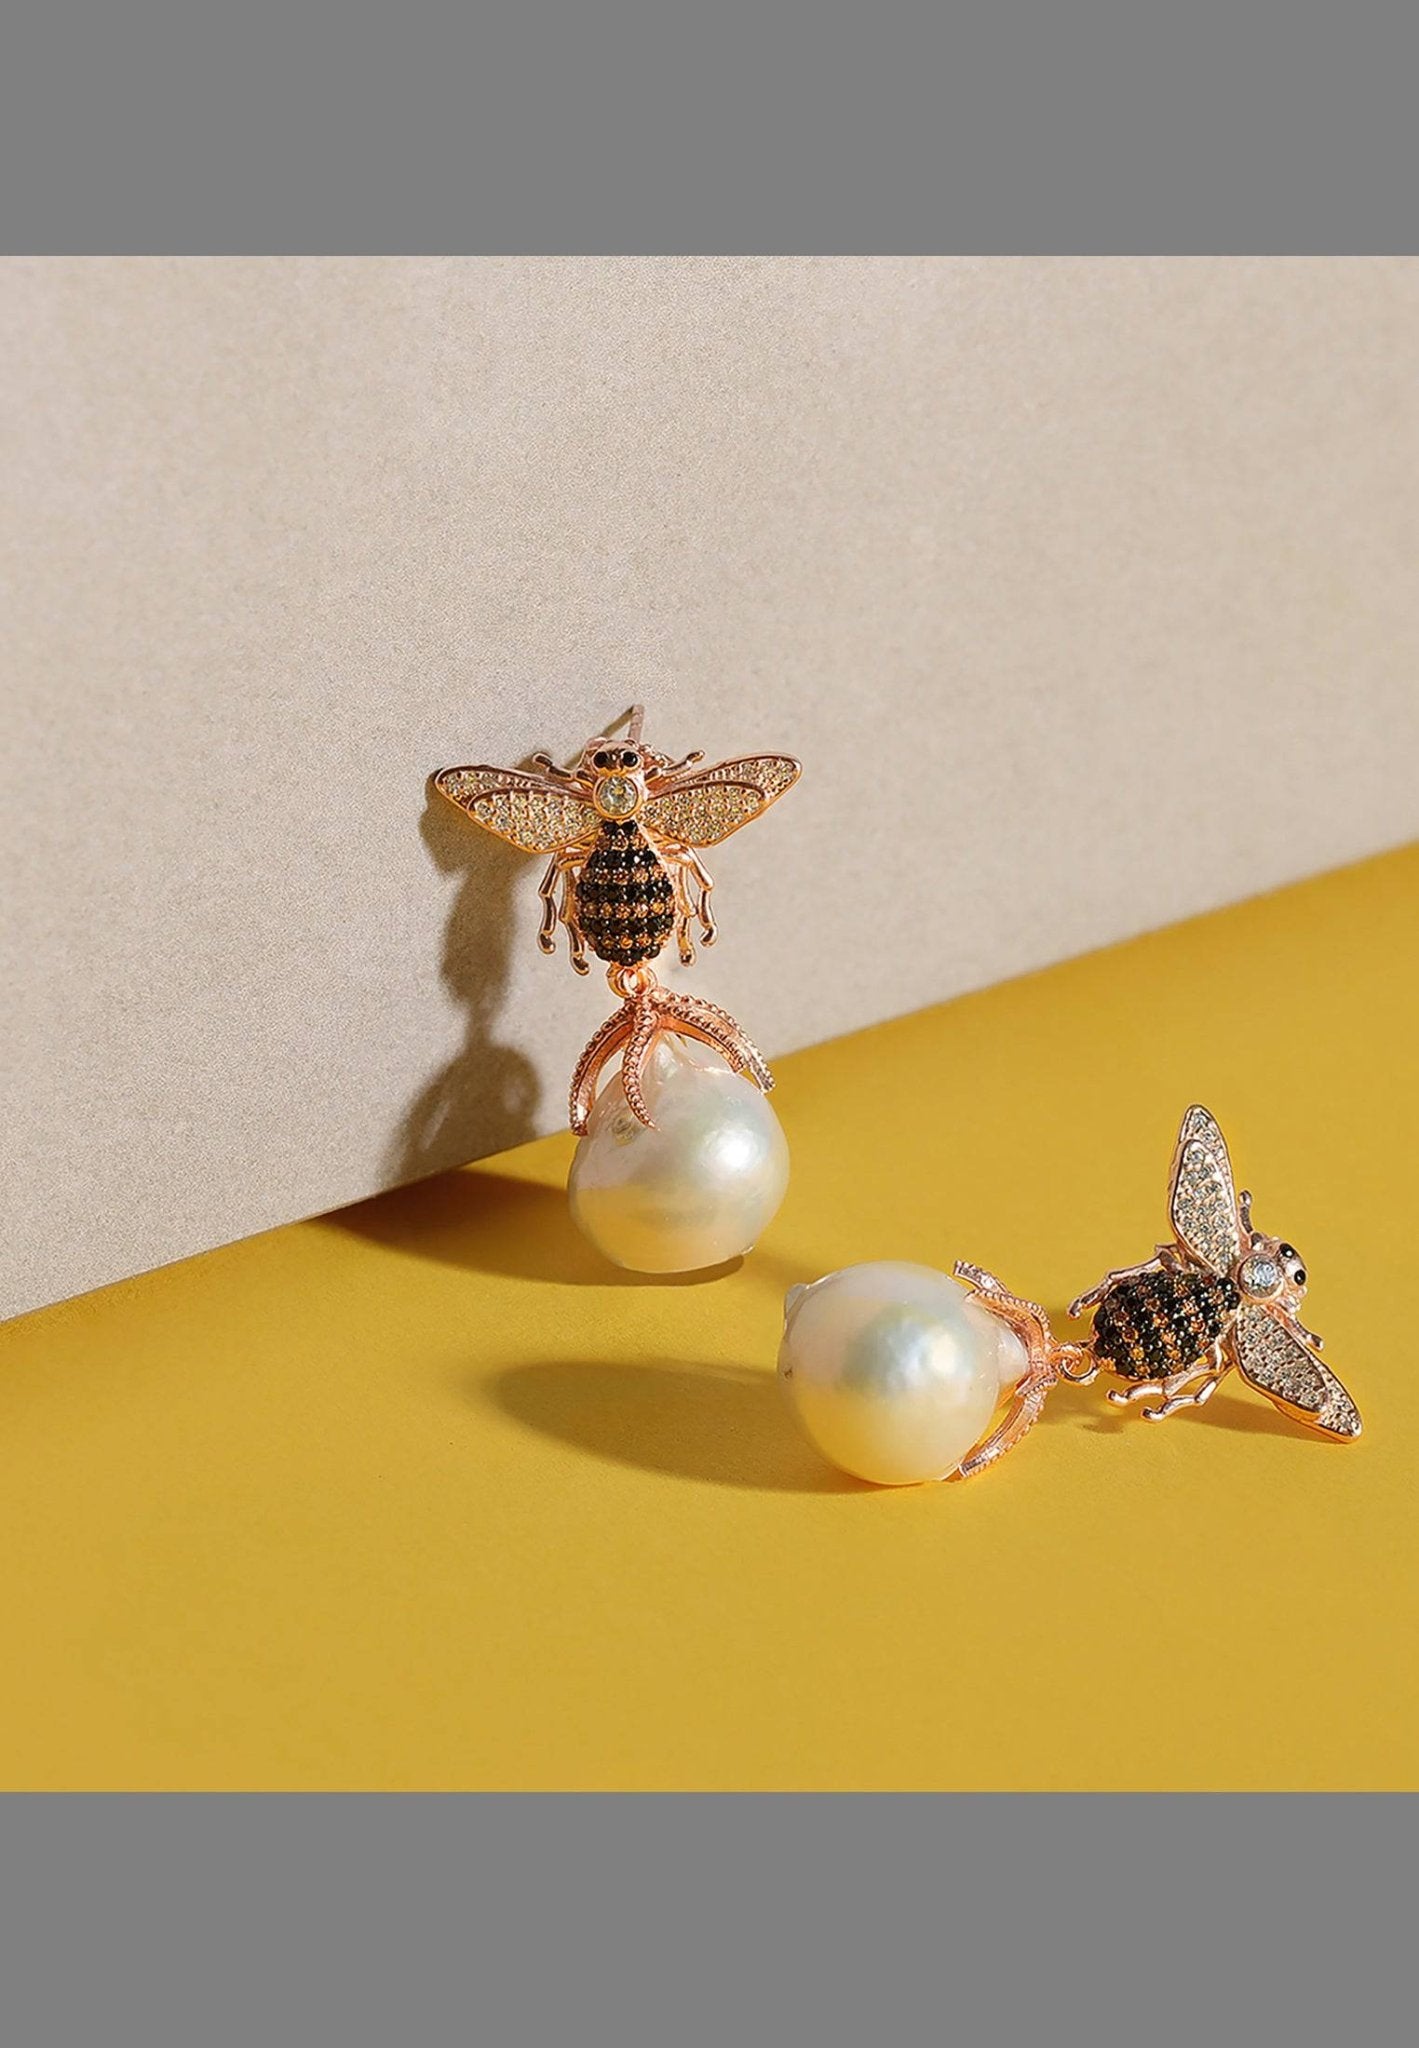 Baroque Pearl Honey Bee Drop Earrings Rosegold - LATELITA Earrings